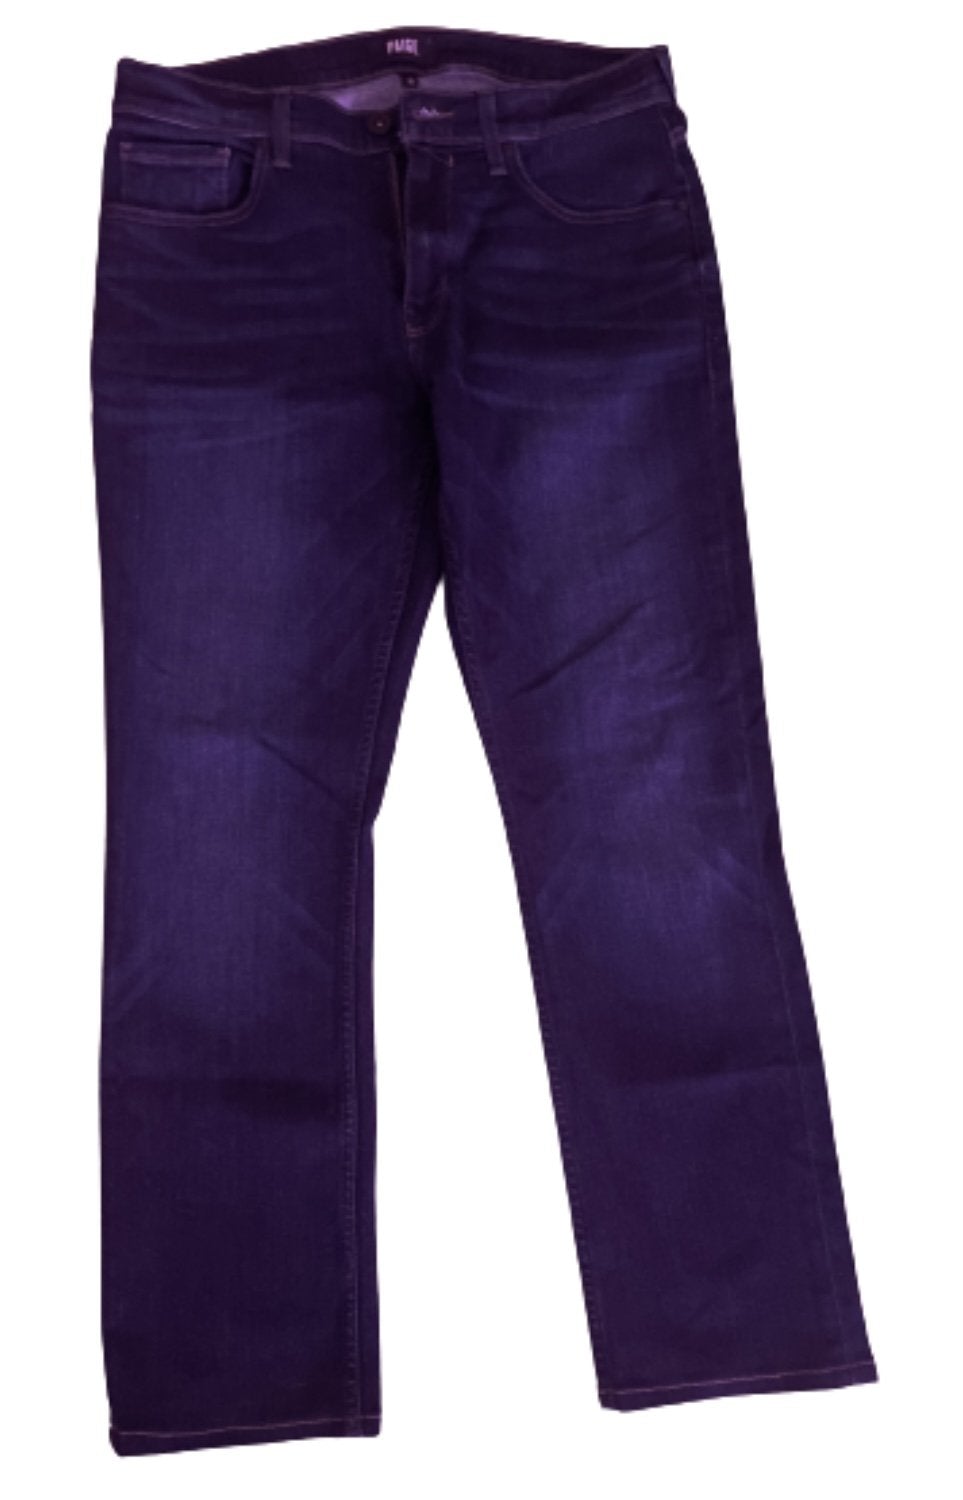 NEW GIRL: Nick Miller's Paige Premium Denim Jeans (32/33)